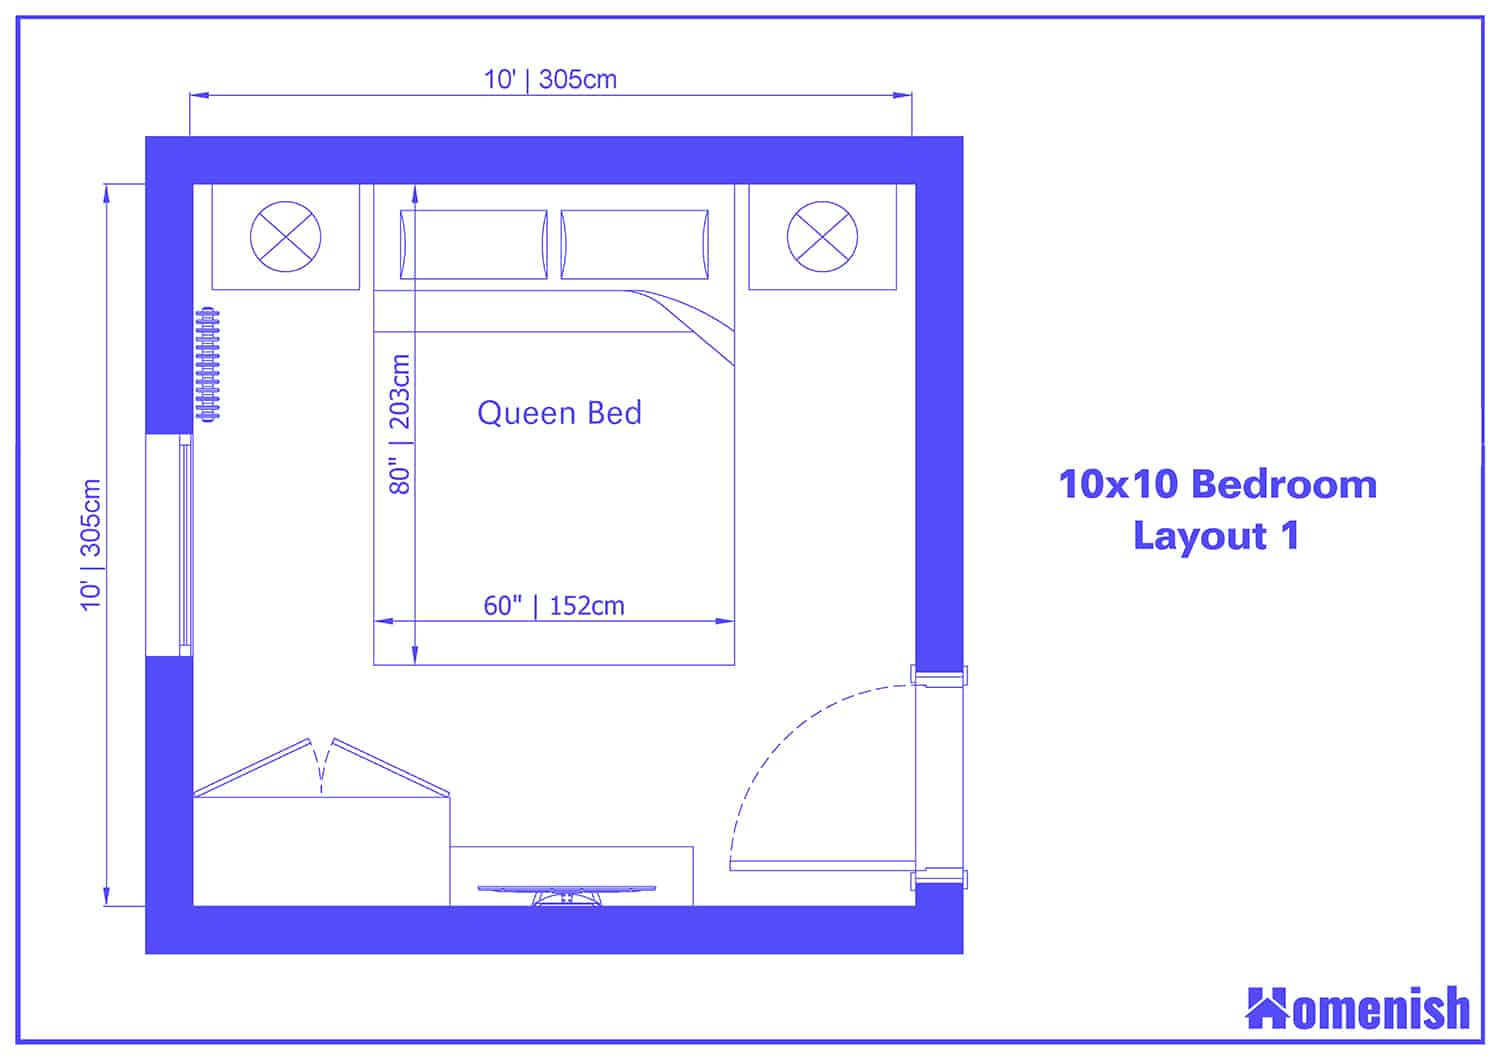 10x10 Bedroom Layout 1